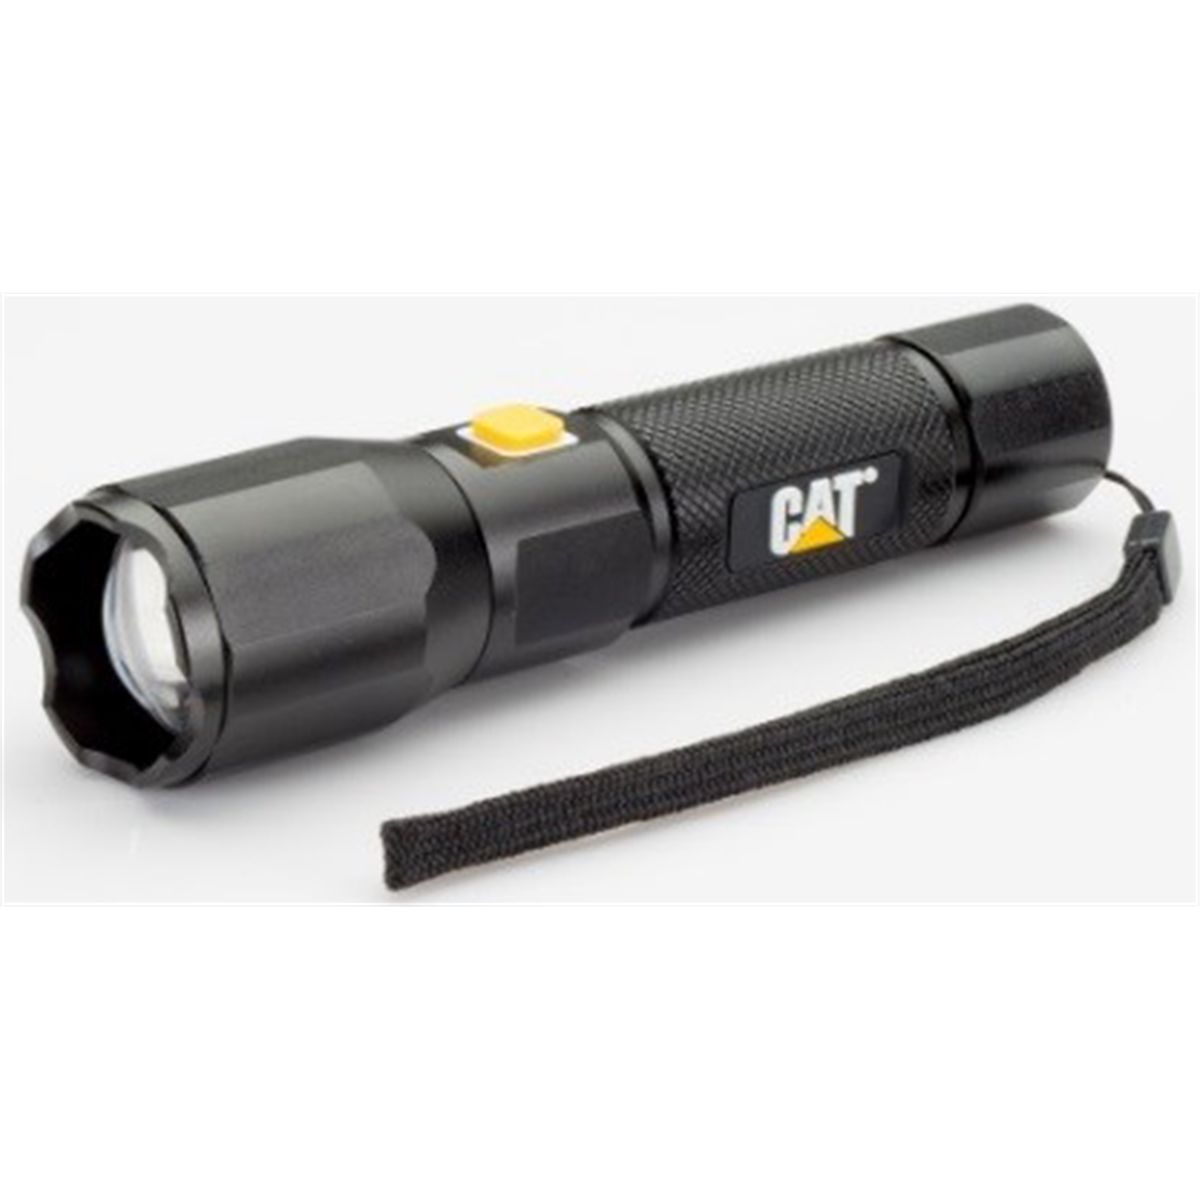 Rechargeable Focusing CAT Tactical Flashlight, 420 Lumen